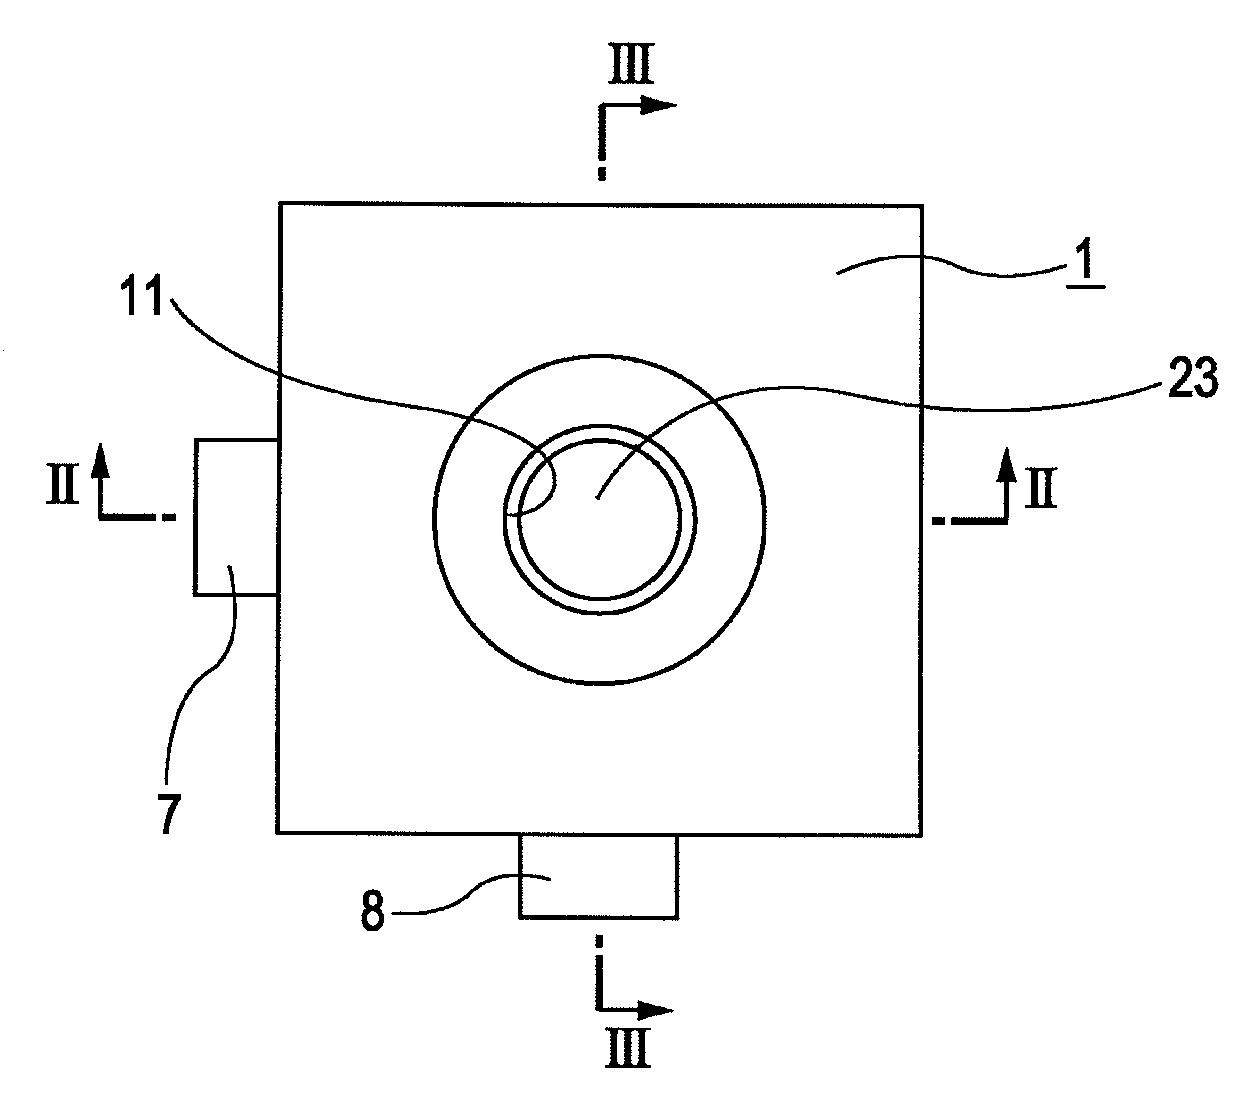 Multi-directional input apparatus